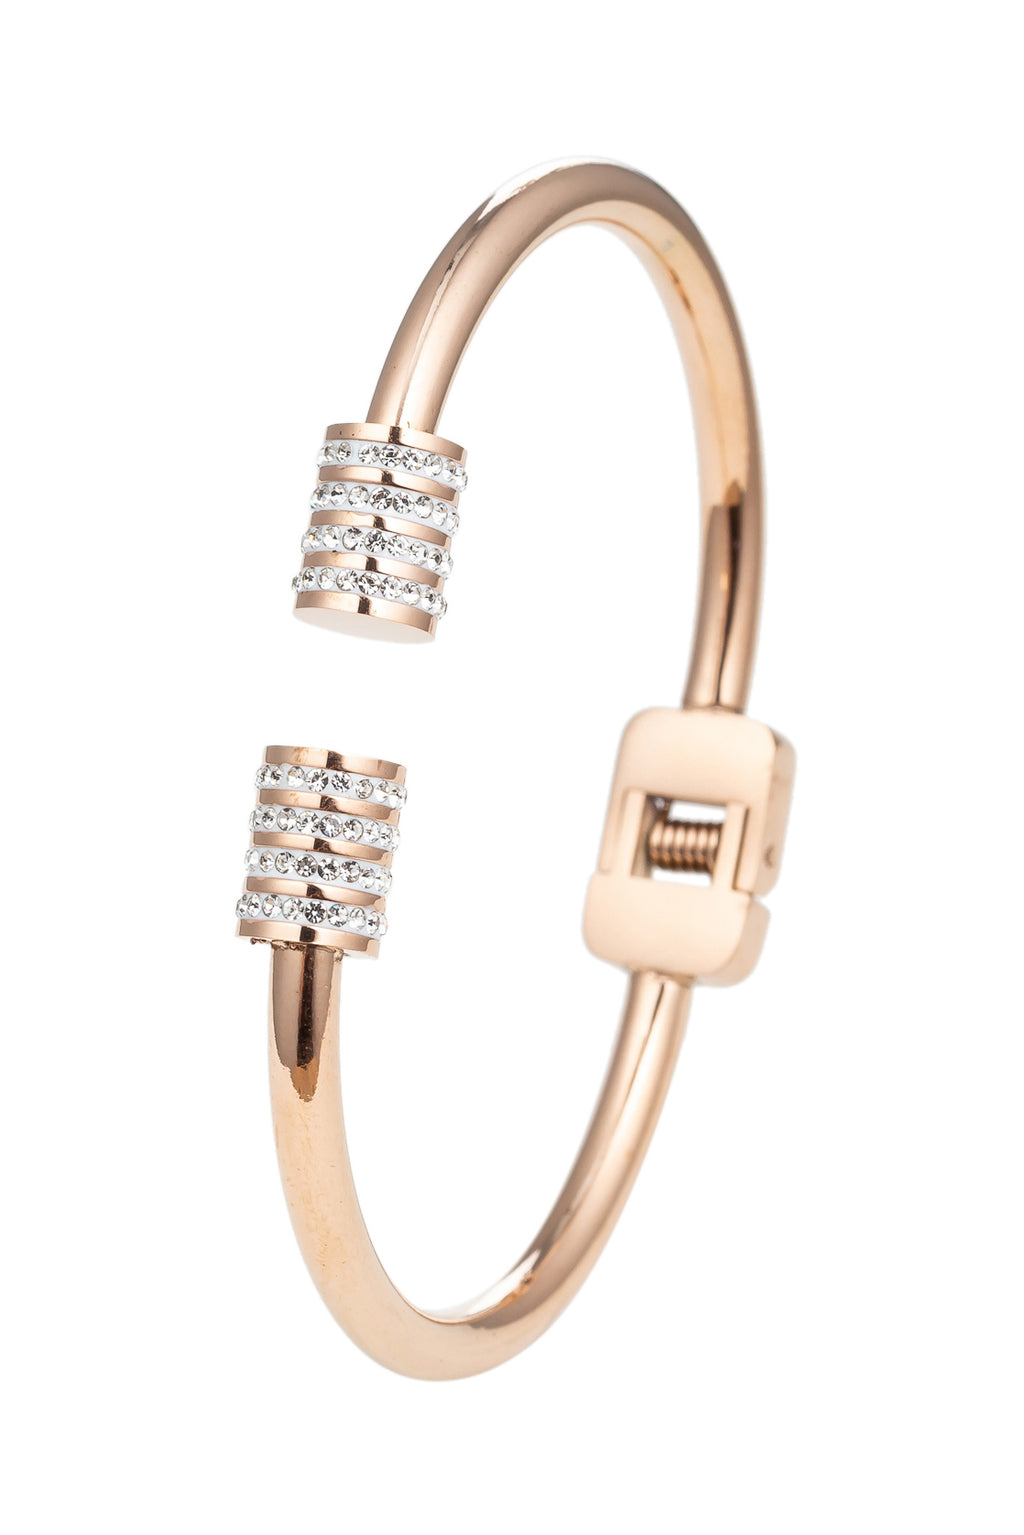 Titanium gold tone cuff bracelet studded with CZ crystals.